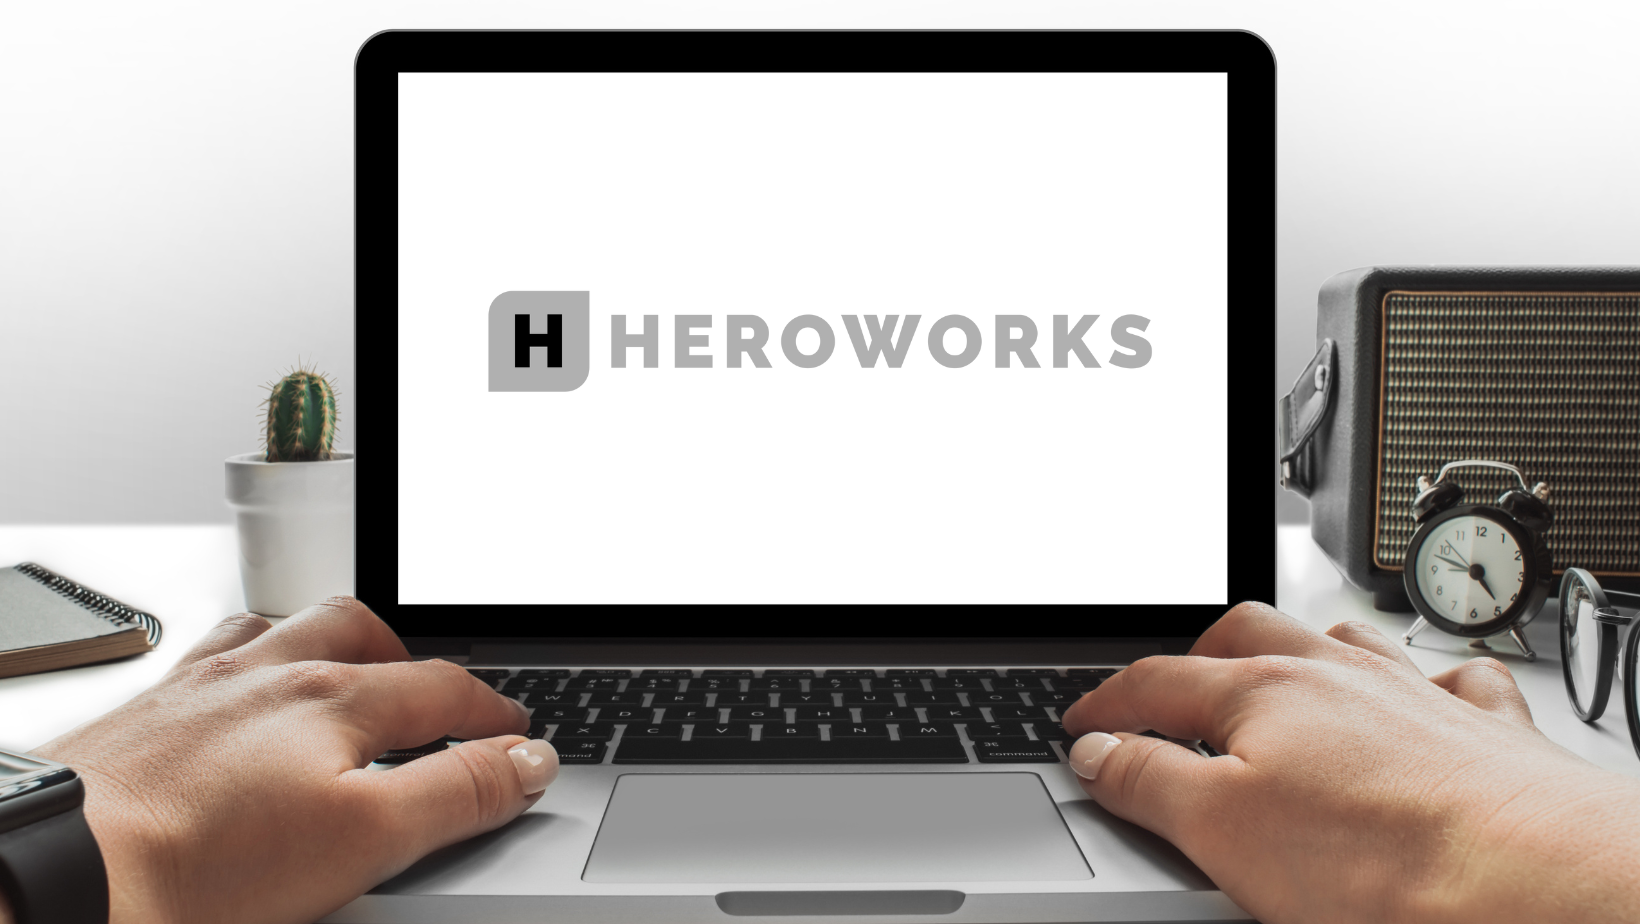 Heroworks: Storytelling für alle